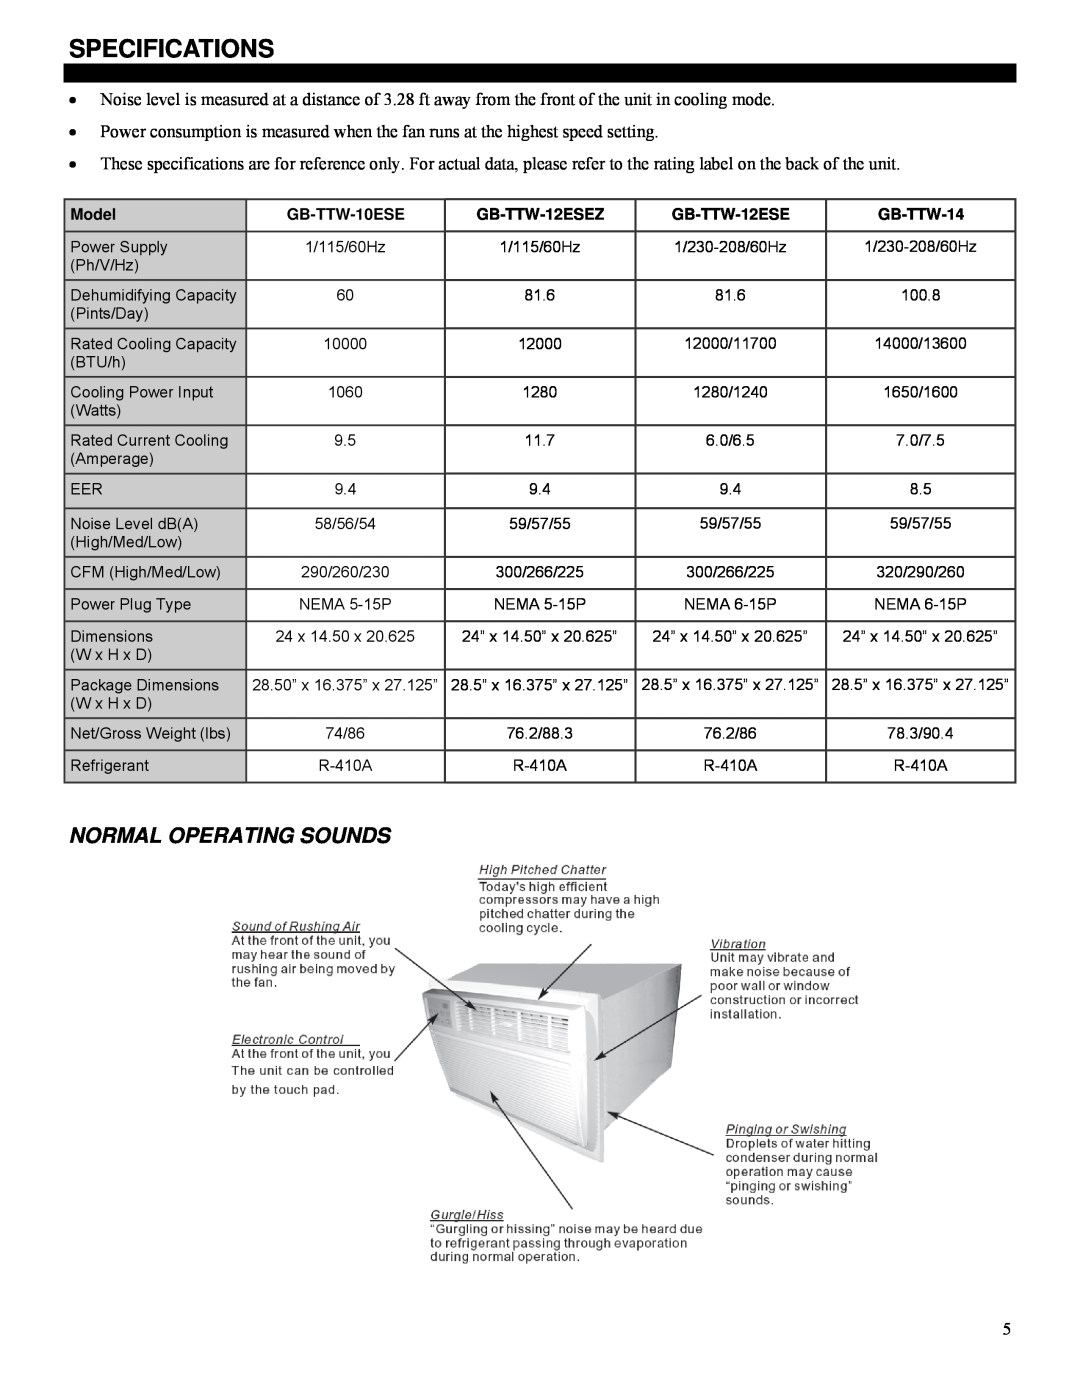 Soleus Air GB-TTW-10ESE, GB-TTW-14, GB-TTW-12ESEZ manual Specifications, Normal Operating Sounds 